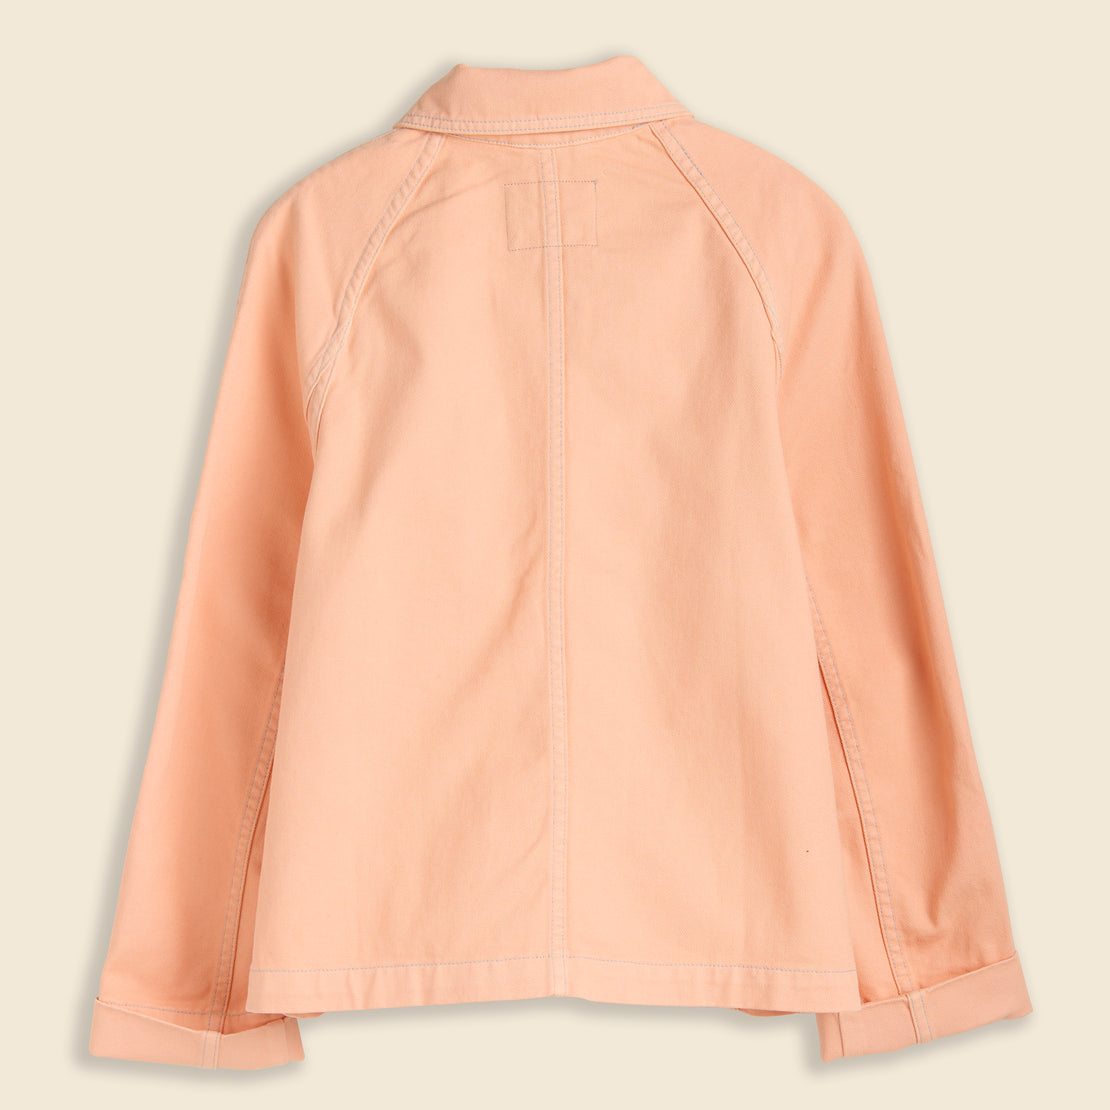 Santana Jacket - Peach Quartz - Atelier Delphine - STAG Provisions - W - Outerwear - Coat/Jacket